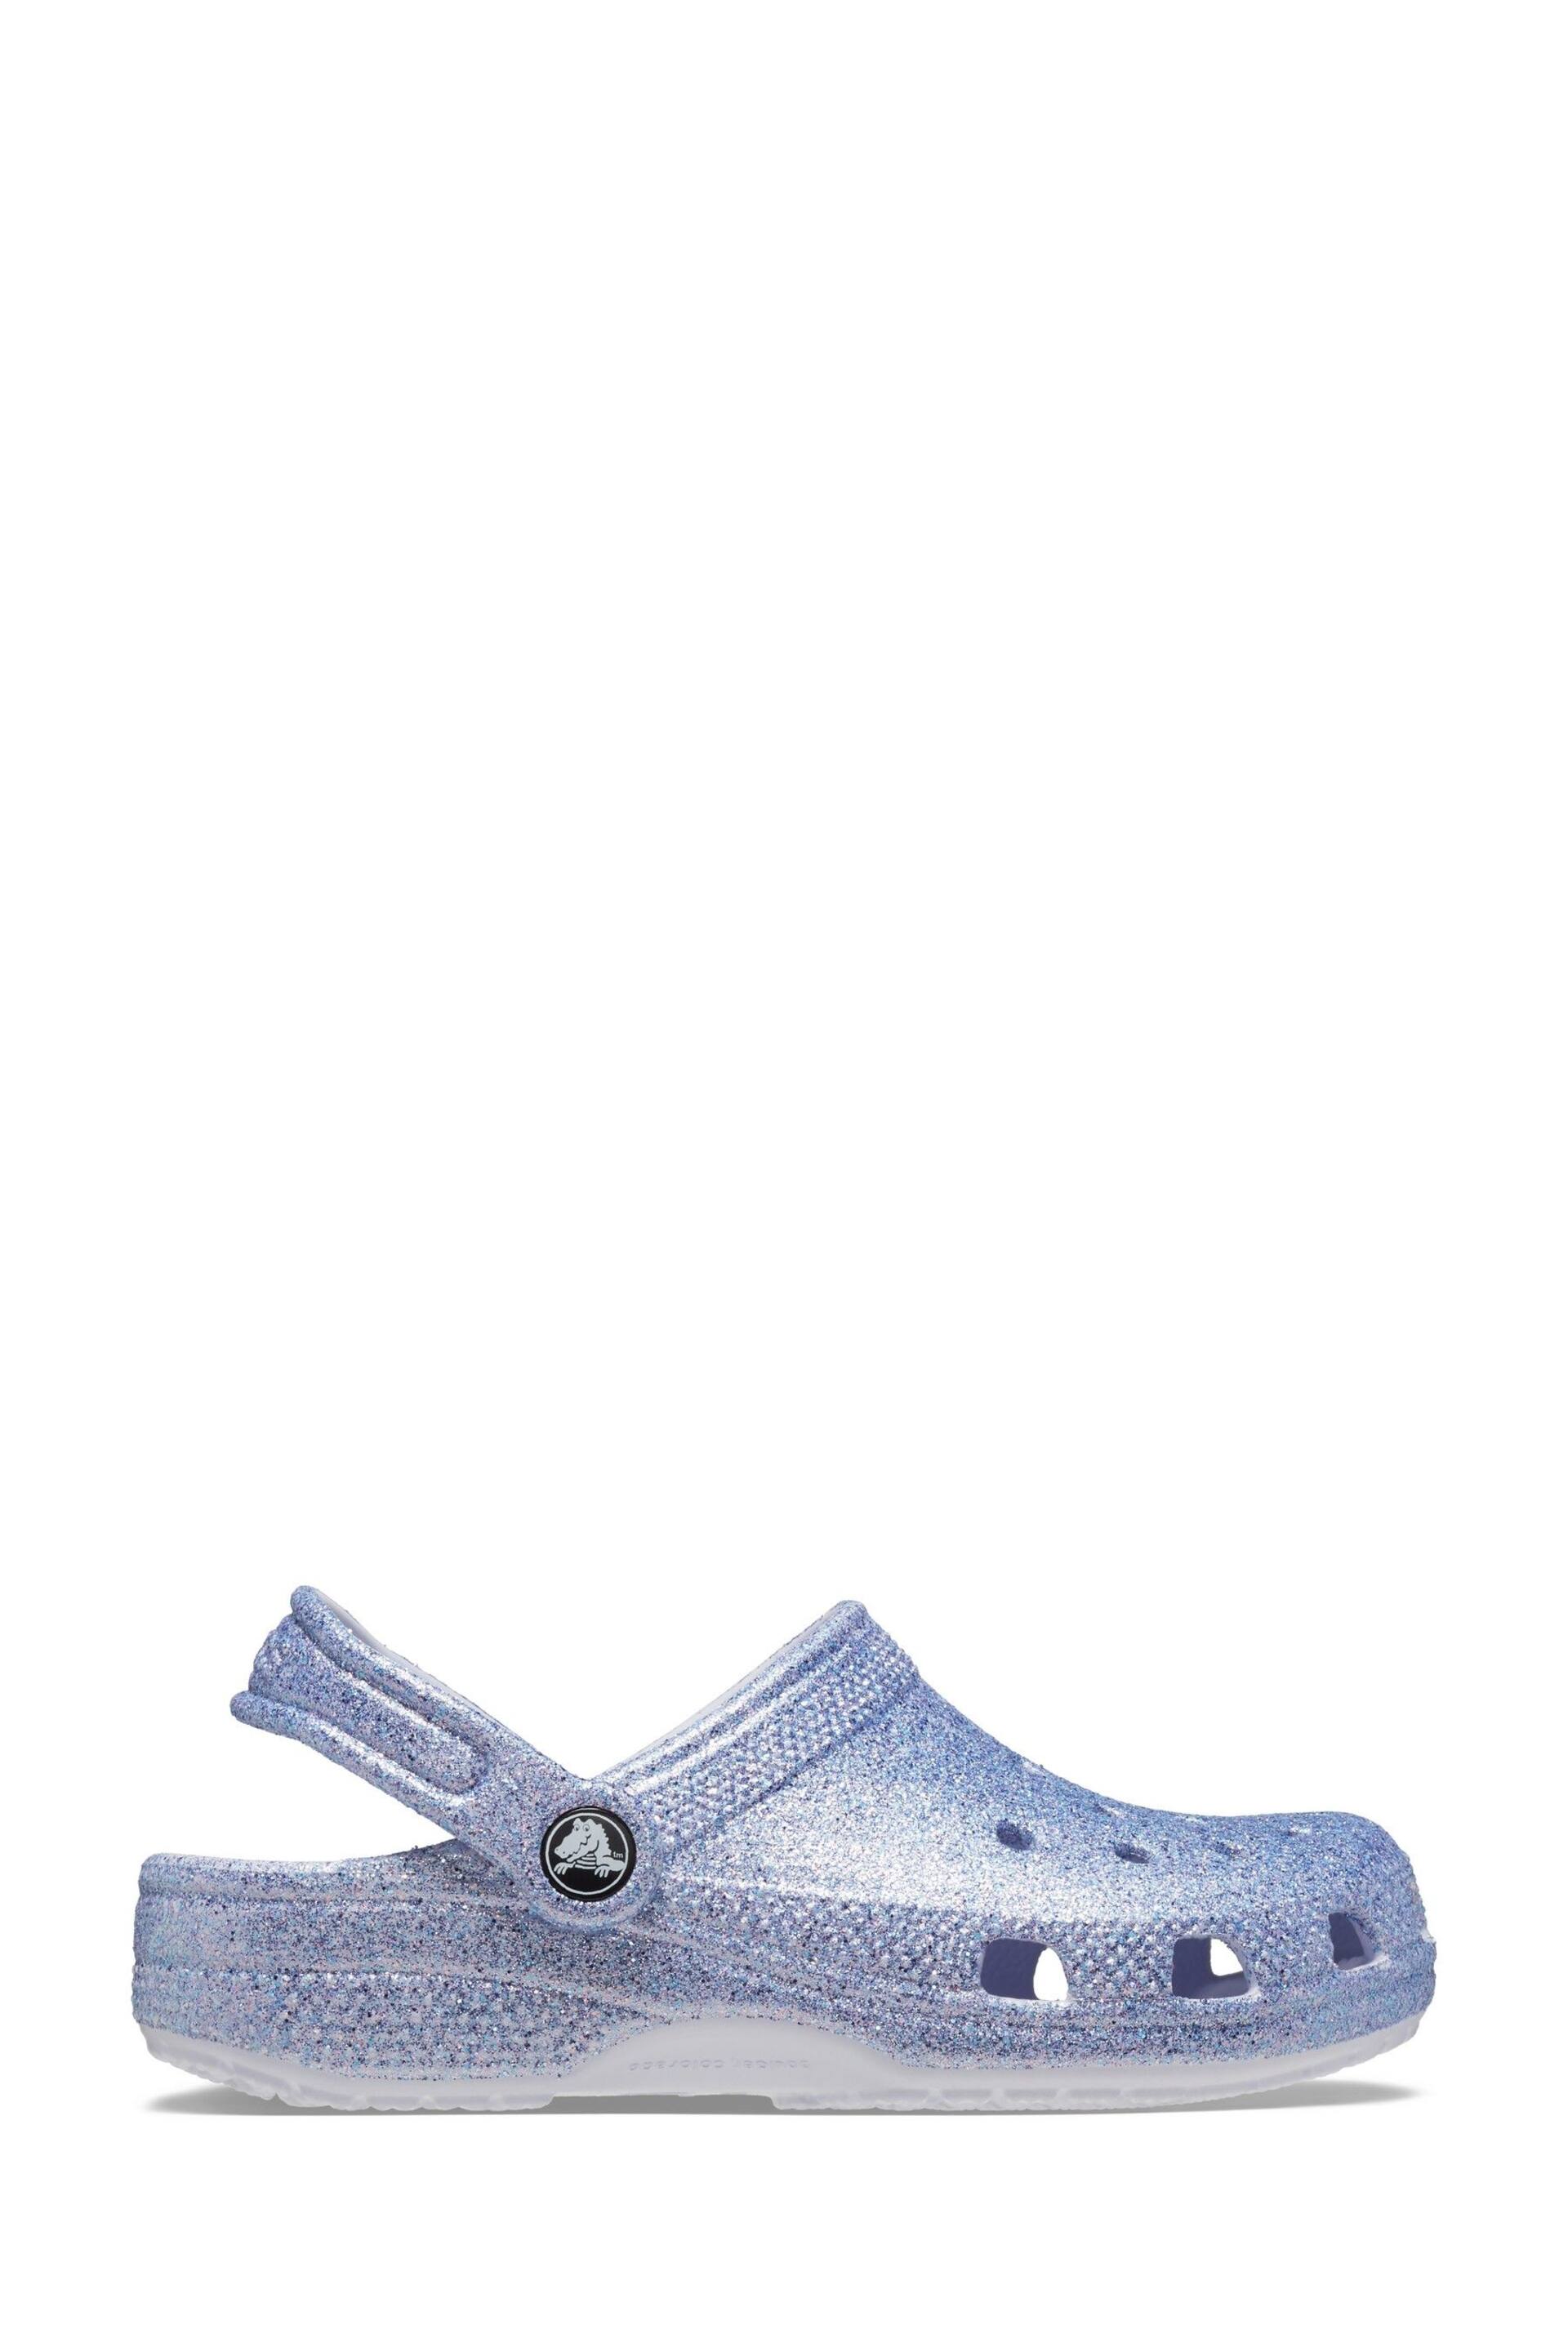 Crocs Kids Violet Purple	Classic Glitter Clogs - Image 2 of 6